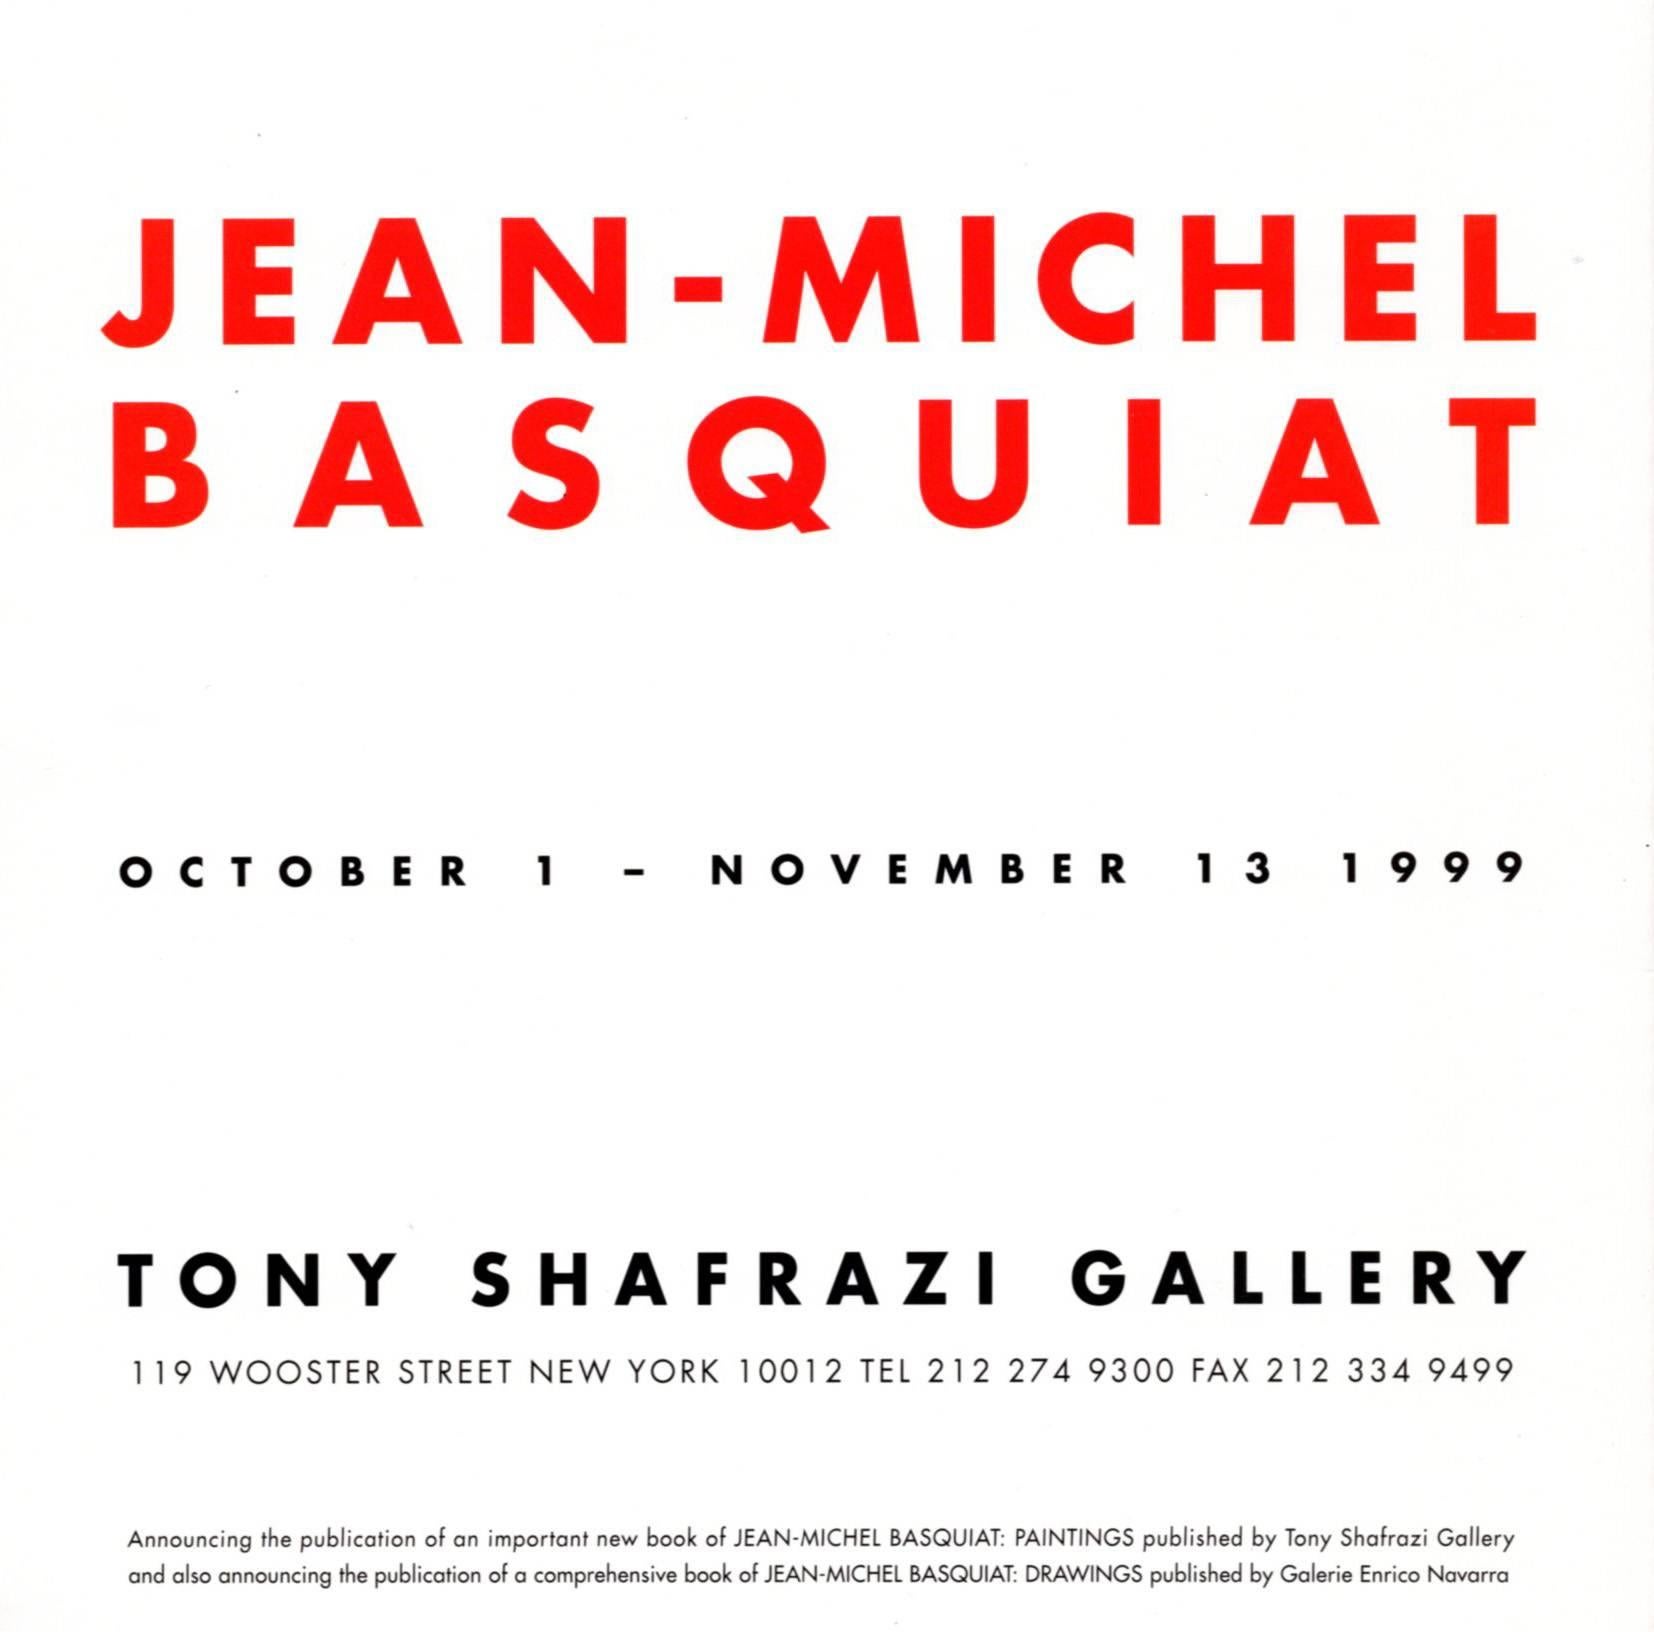 Basquiat announcement card/poster (Tony Shafrazi Gallery) 9